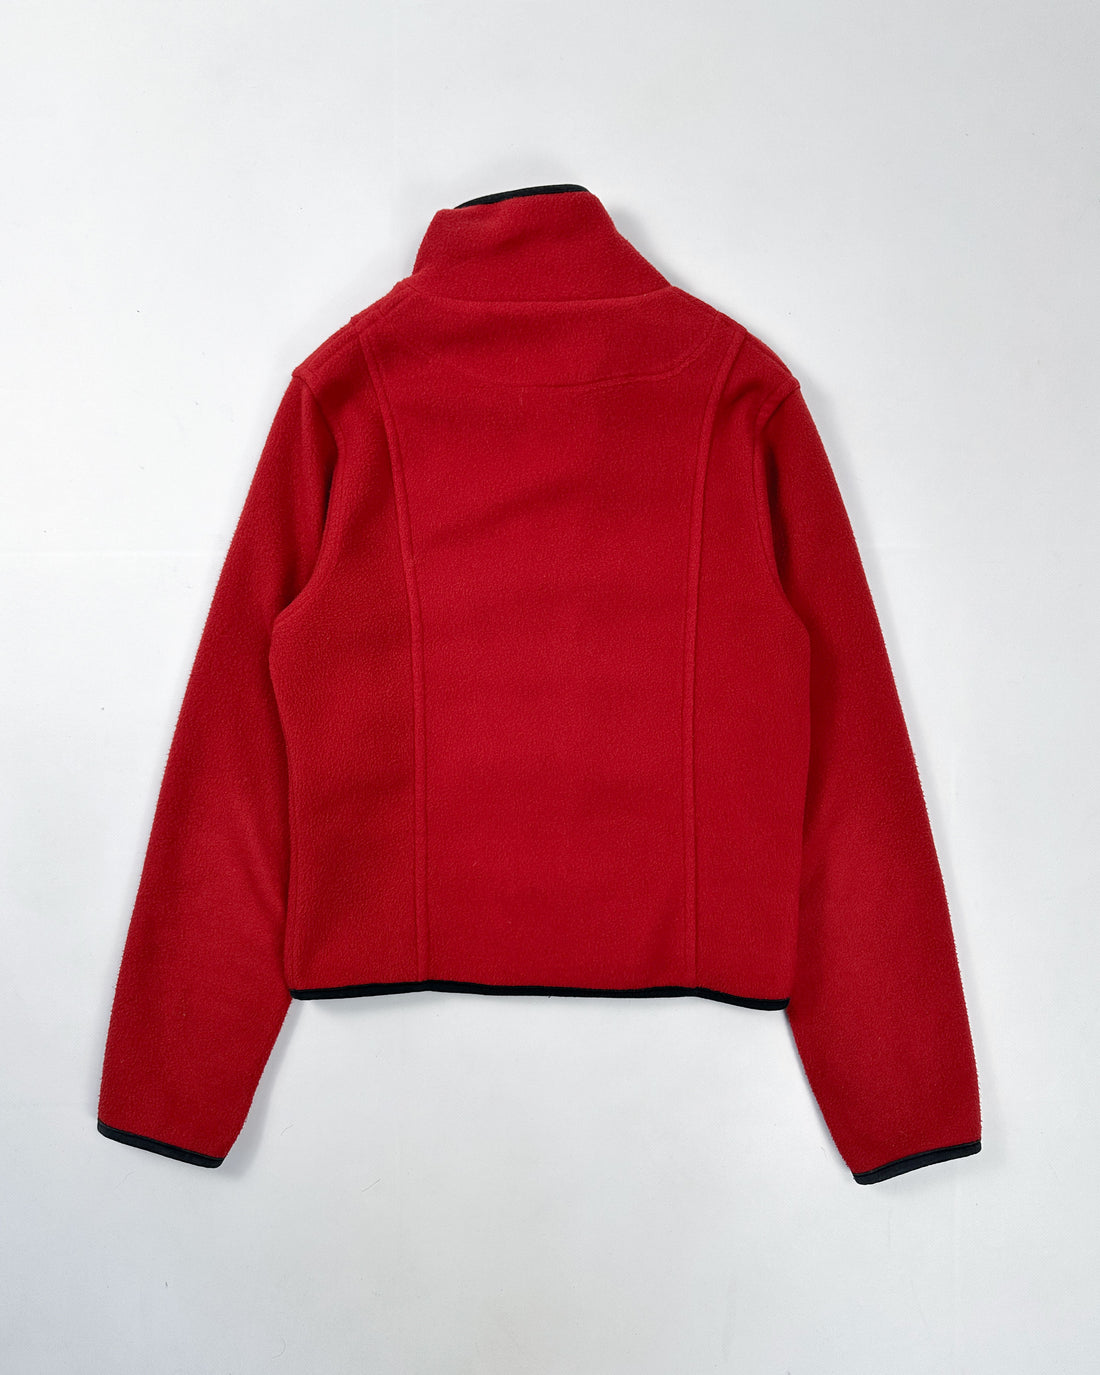 DKNY Cropped Red Polar Fleece 1990's